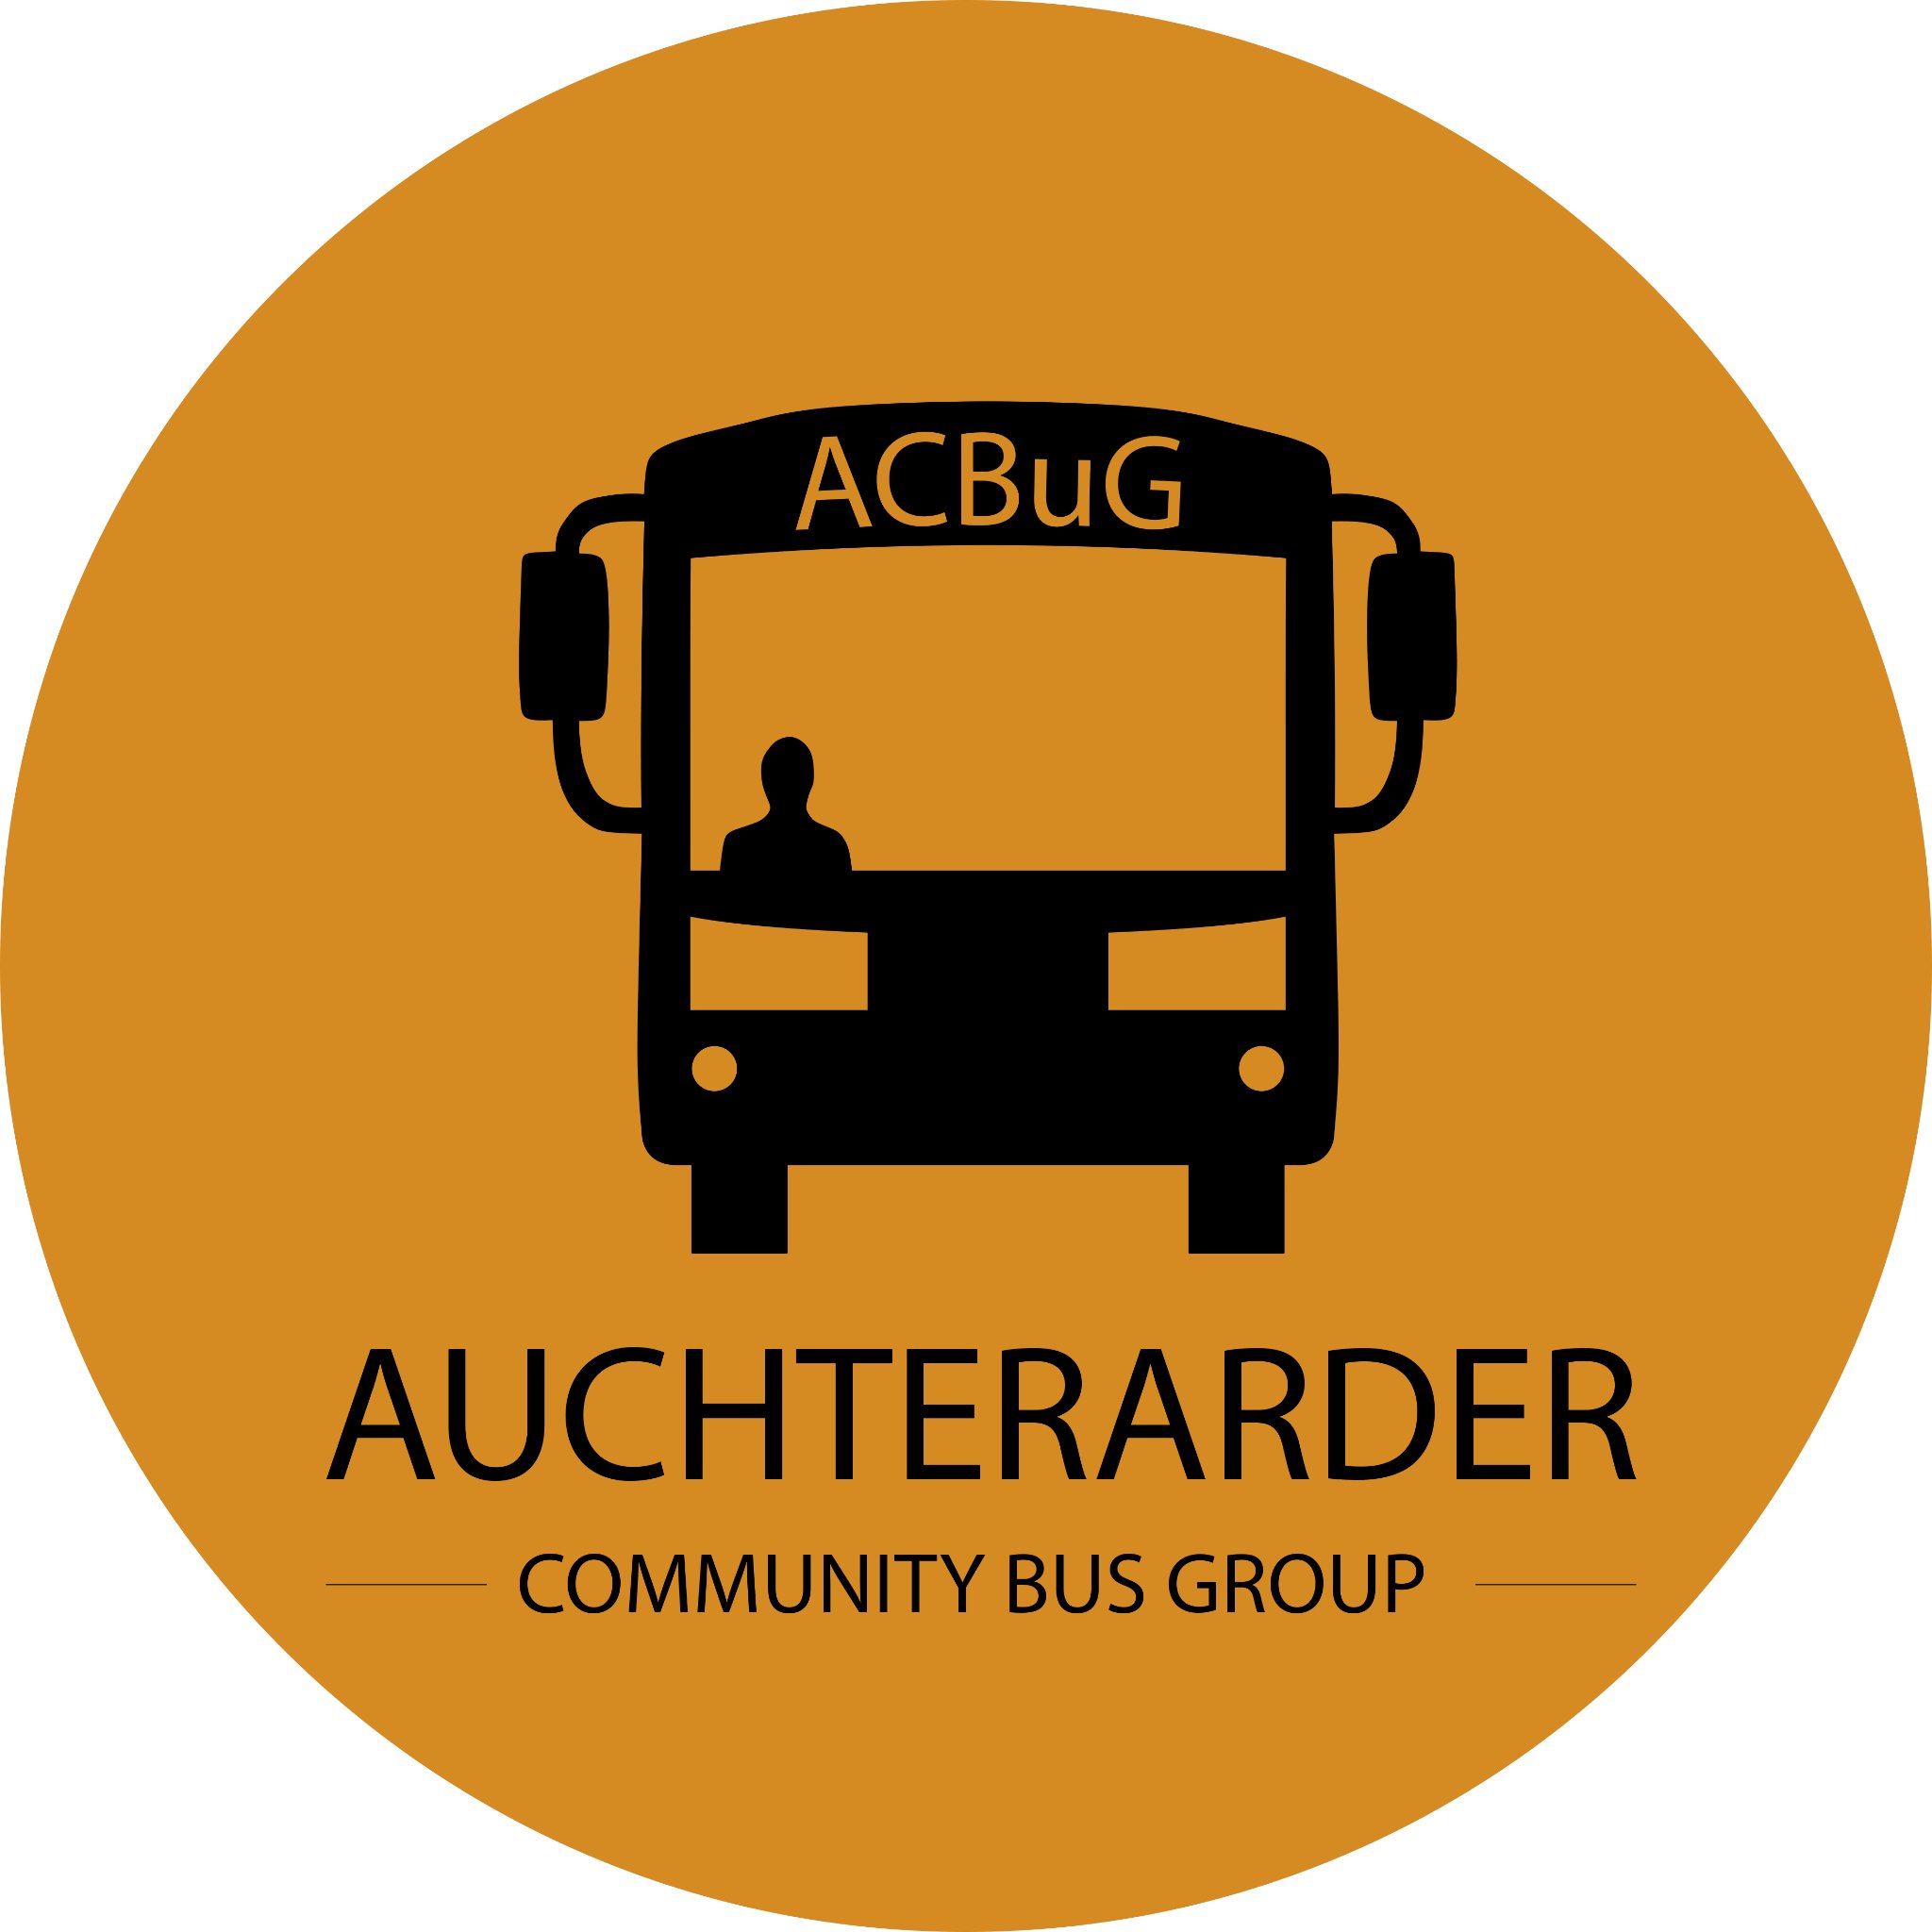 Auchterarder Community Bus Group